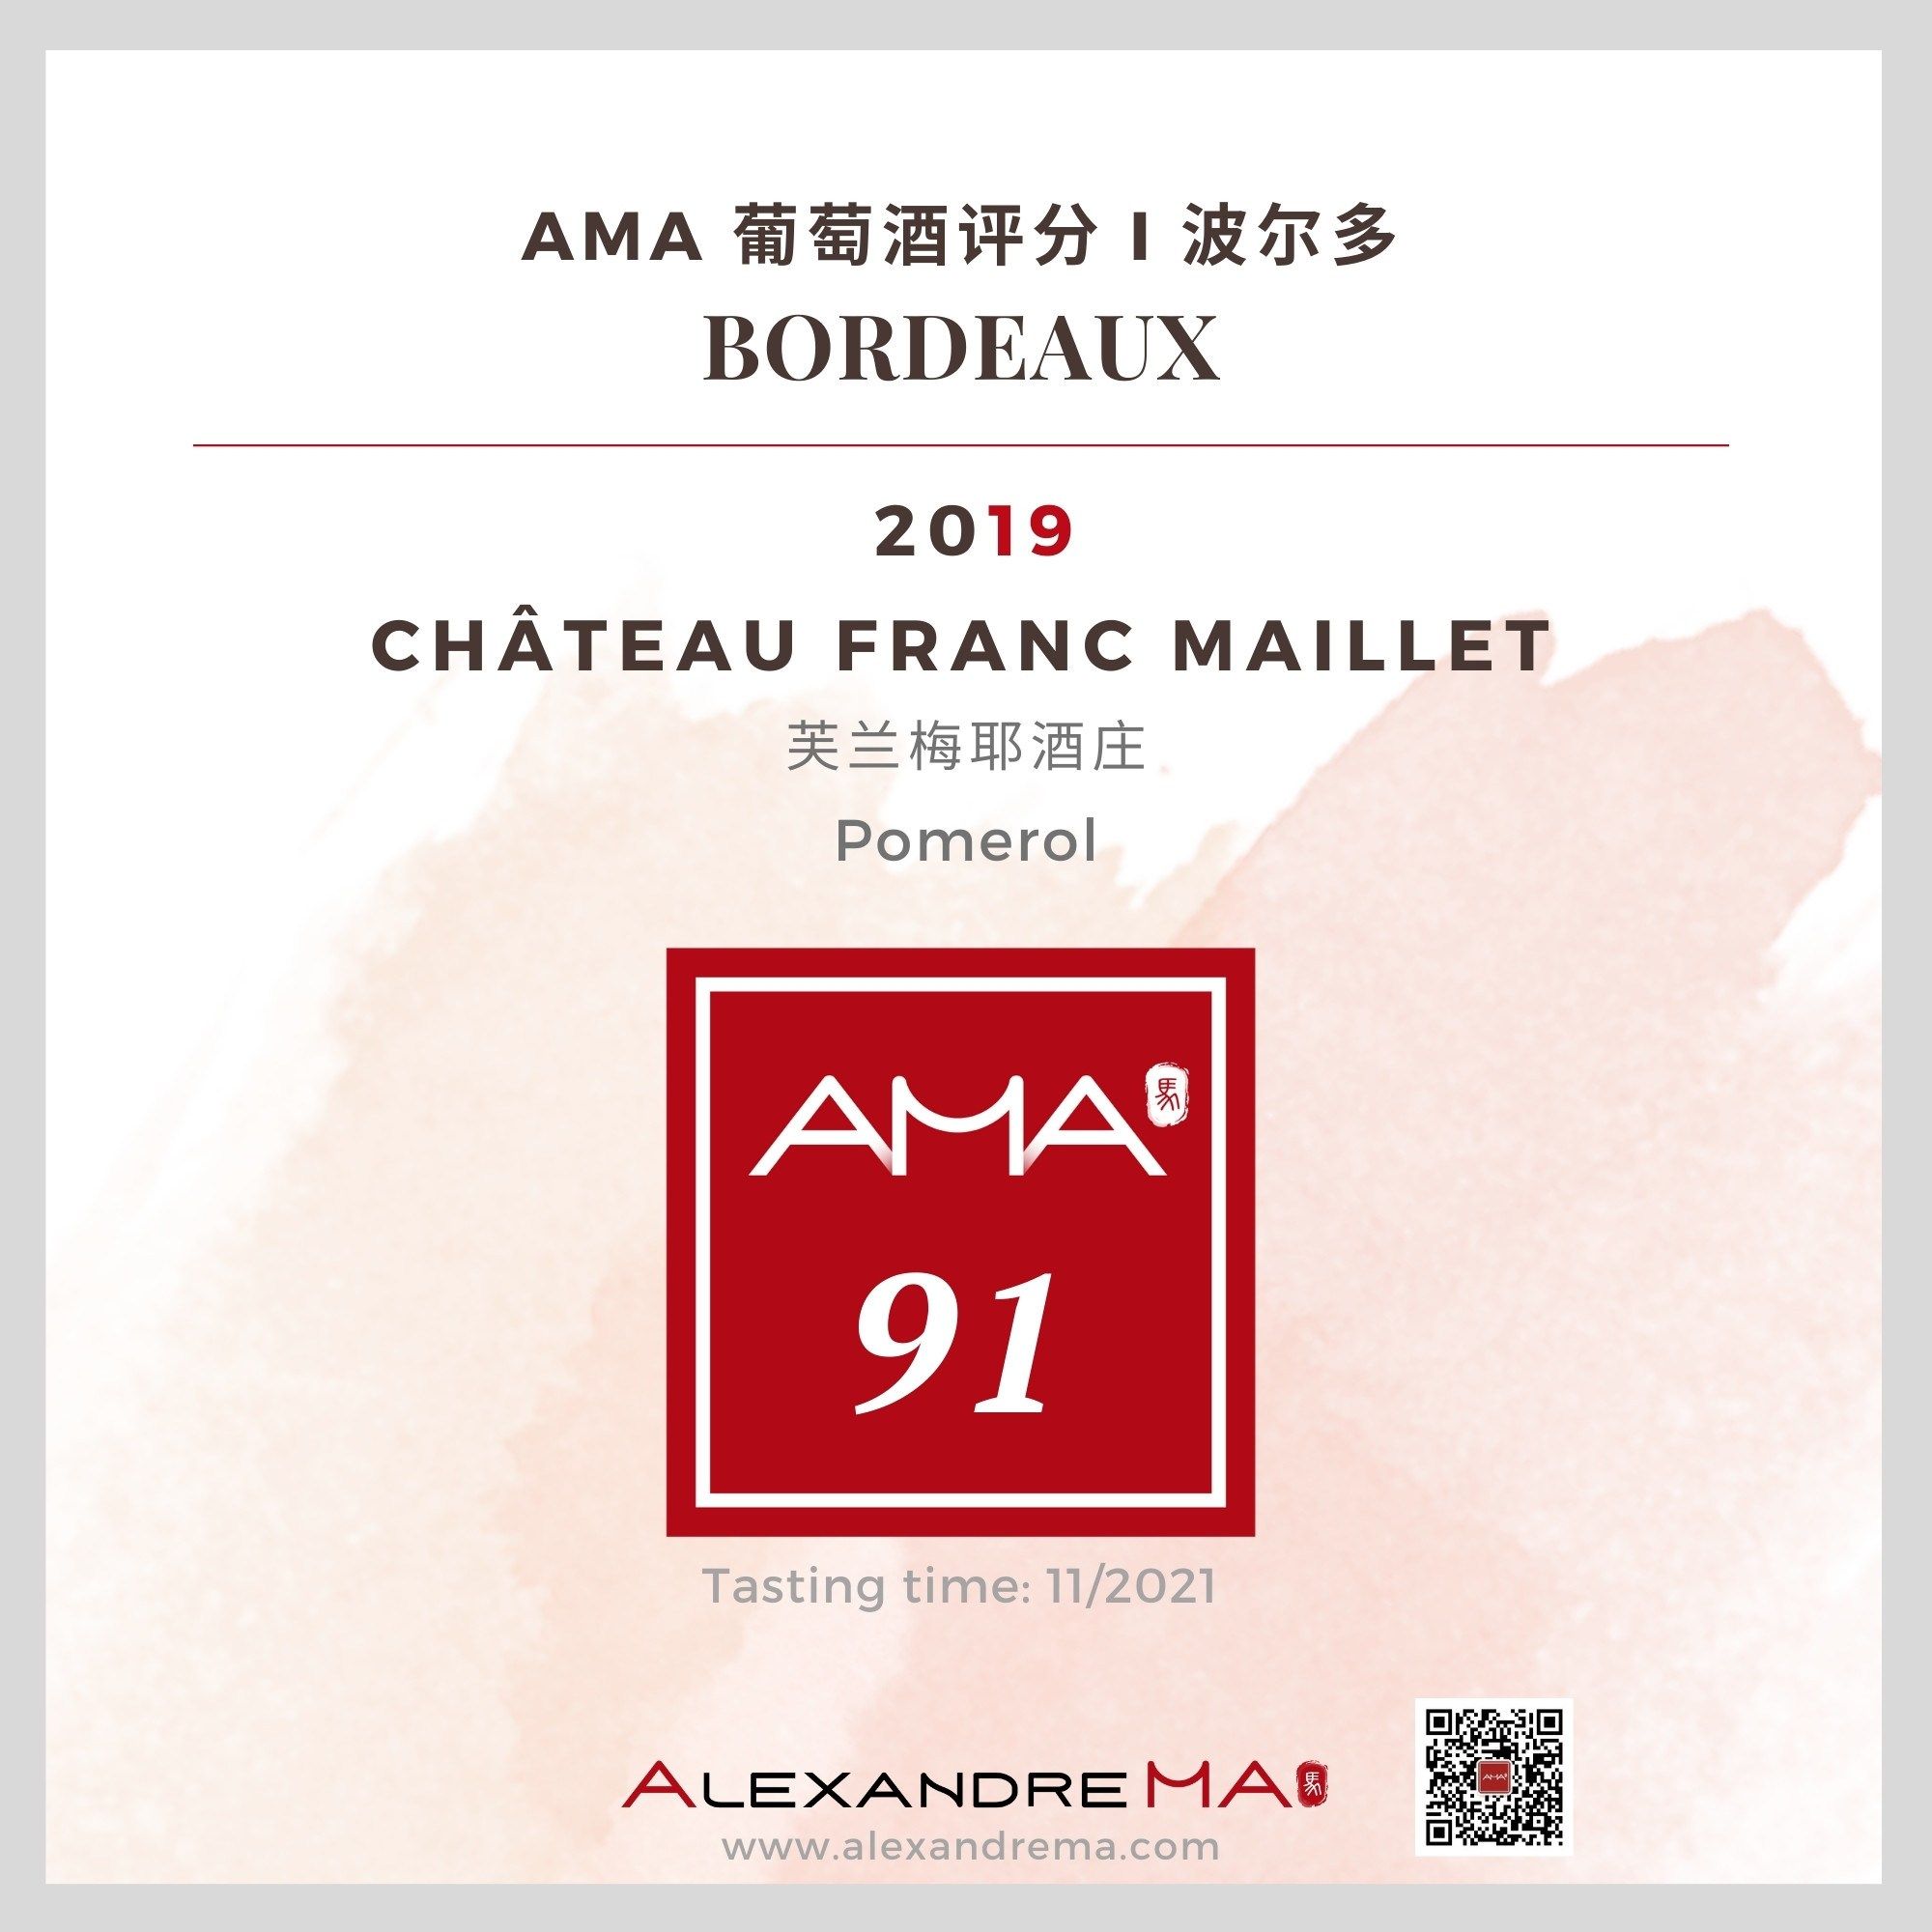 Château Franc Maillet 2019 芙兰梅耶酒庄 - Alexandre Ma